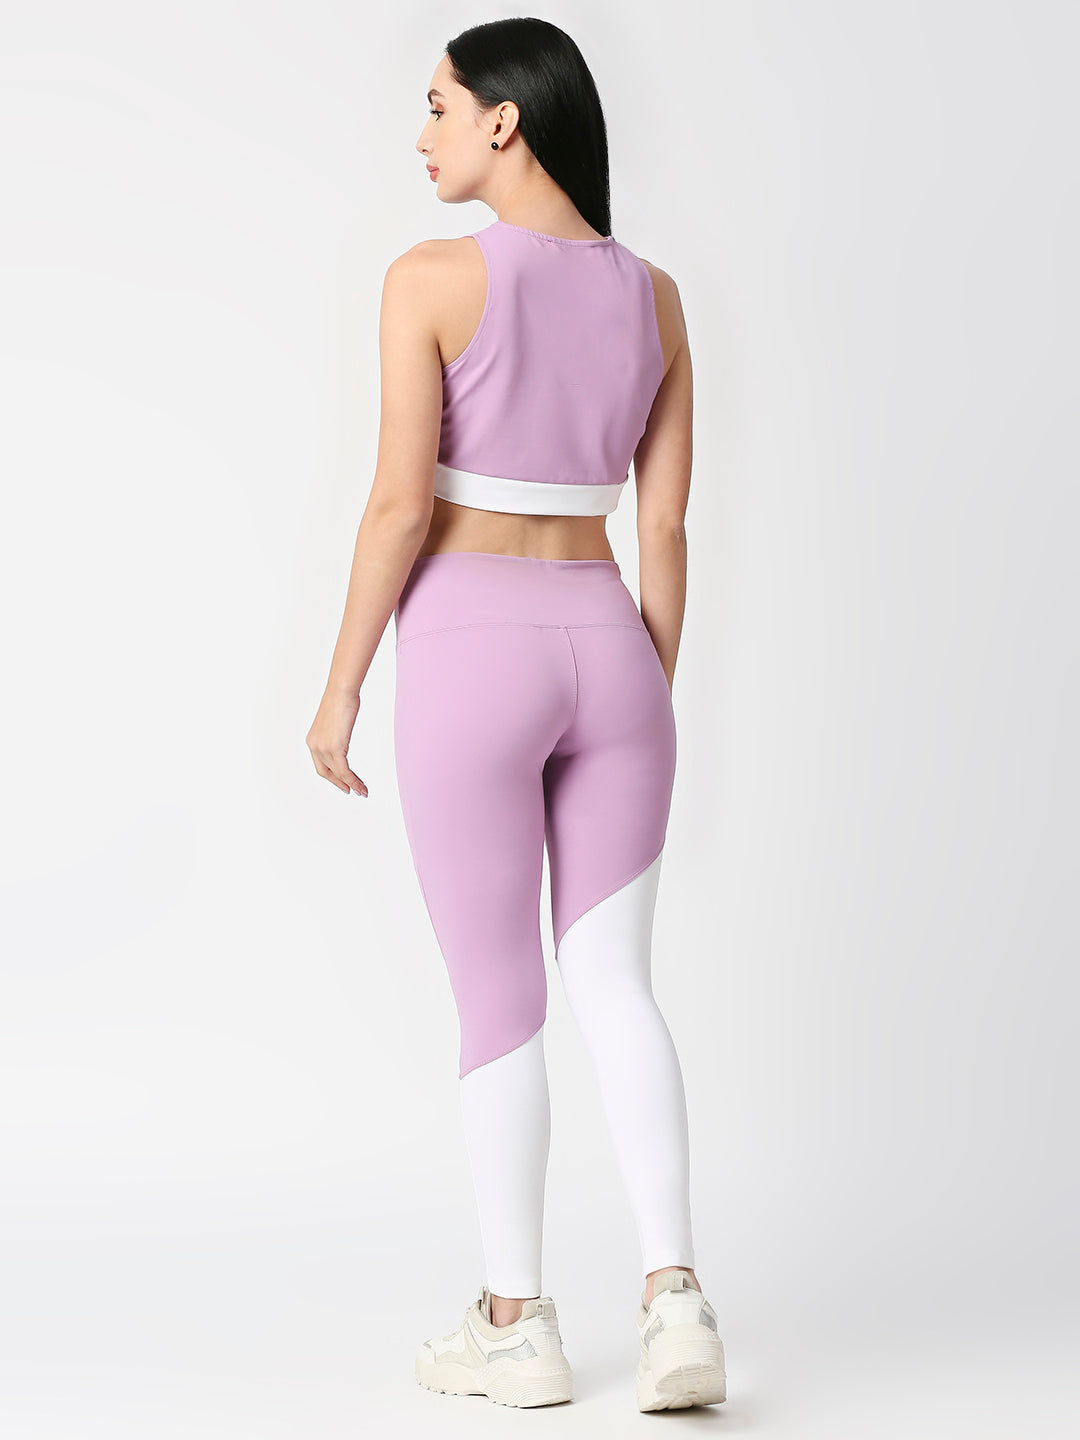 Buy Blamblack Women's Lavender and white color GYM Wear Co-ords set